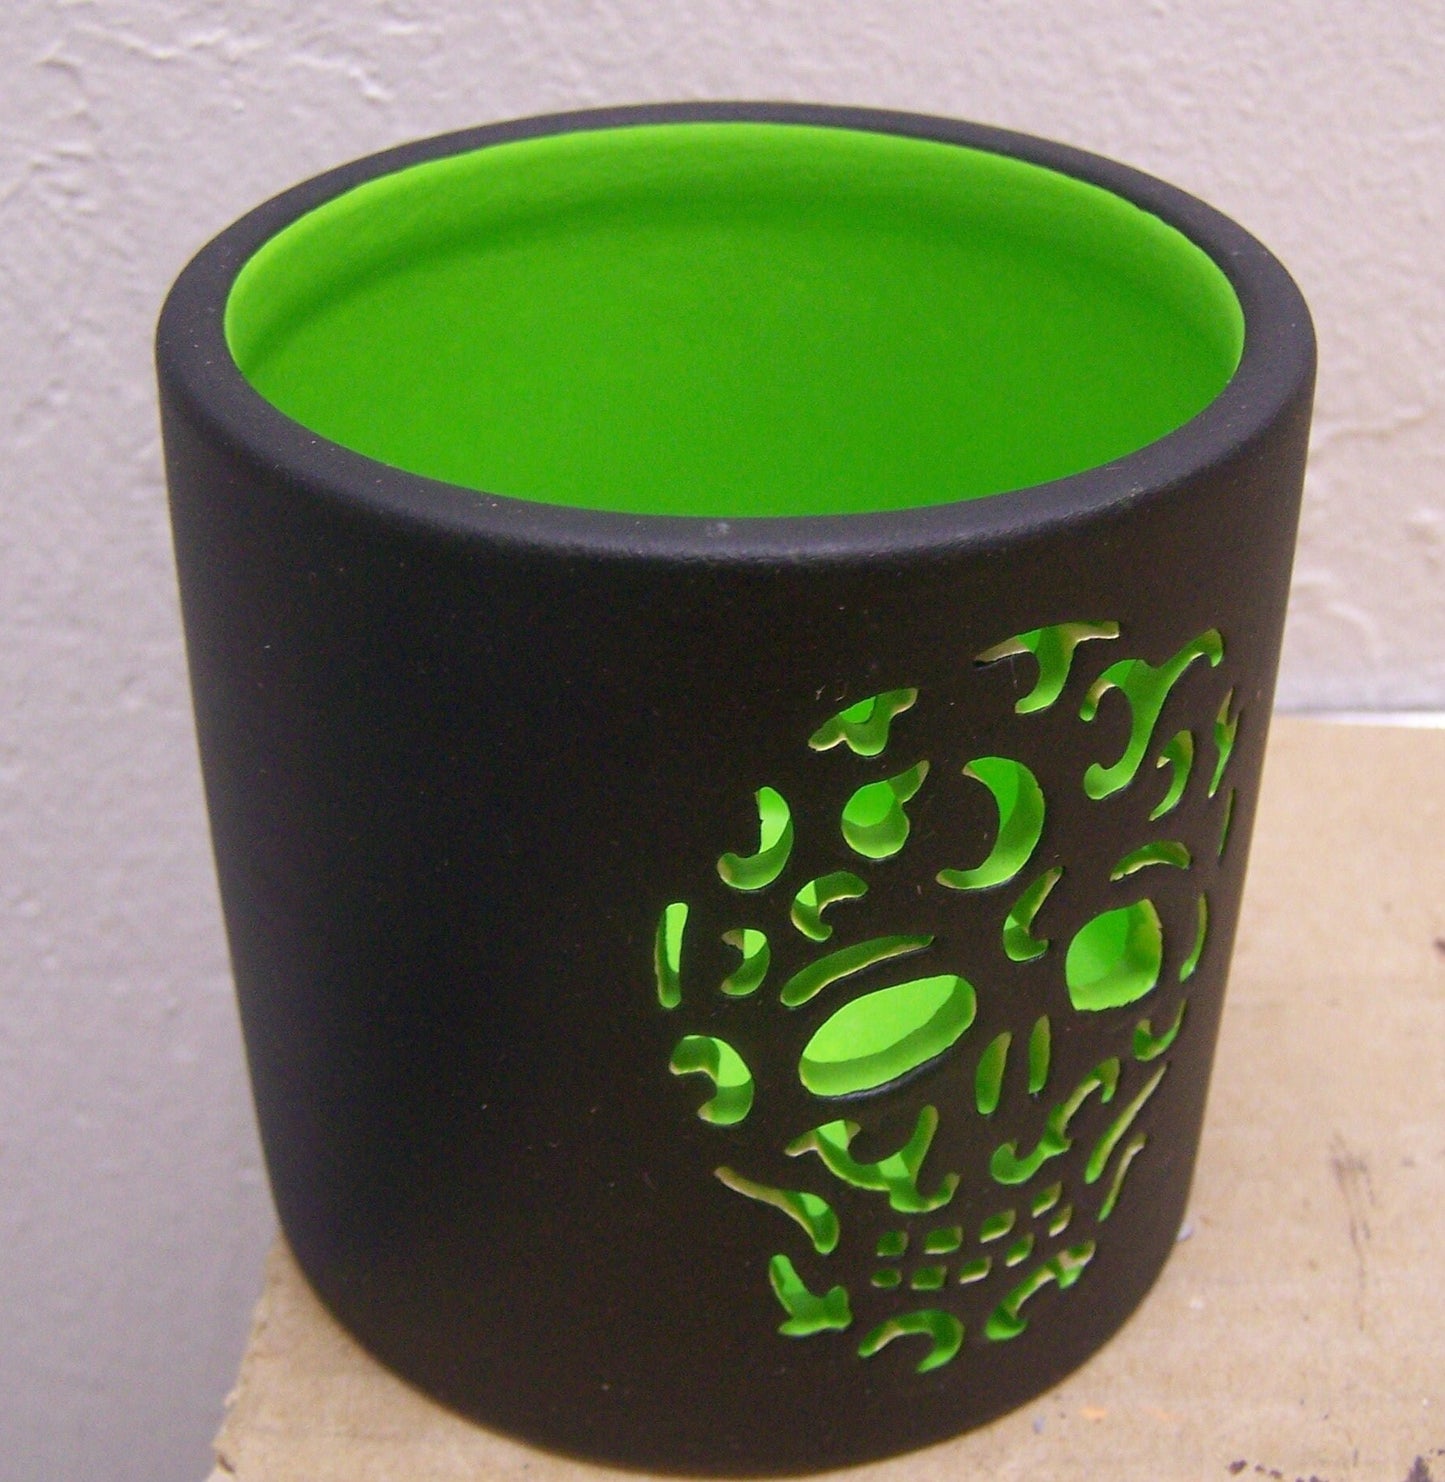 Day of the Dead Ceramic Luminaria, Green - Sugar Skull Design